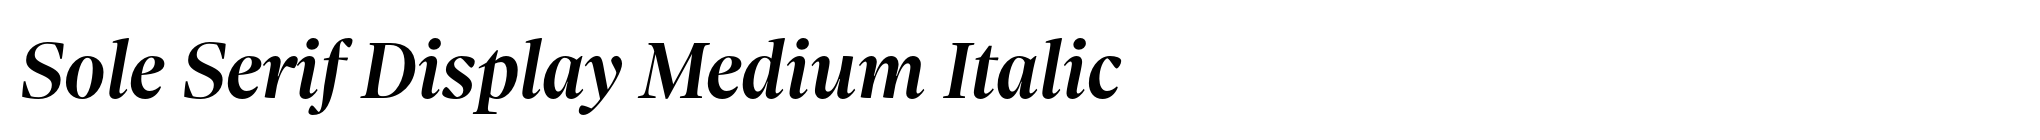 Sole Serif Display Medium Italic image